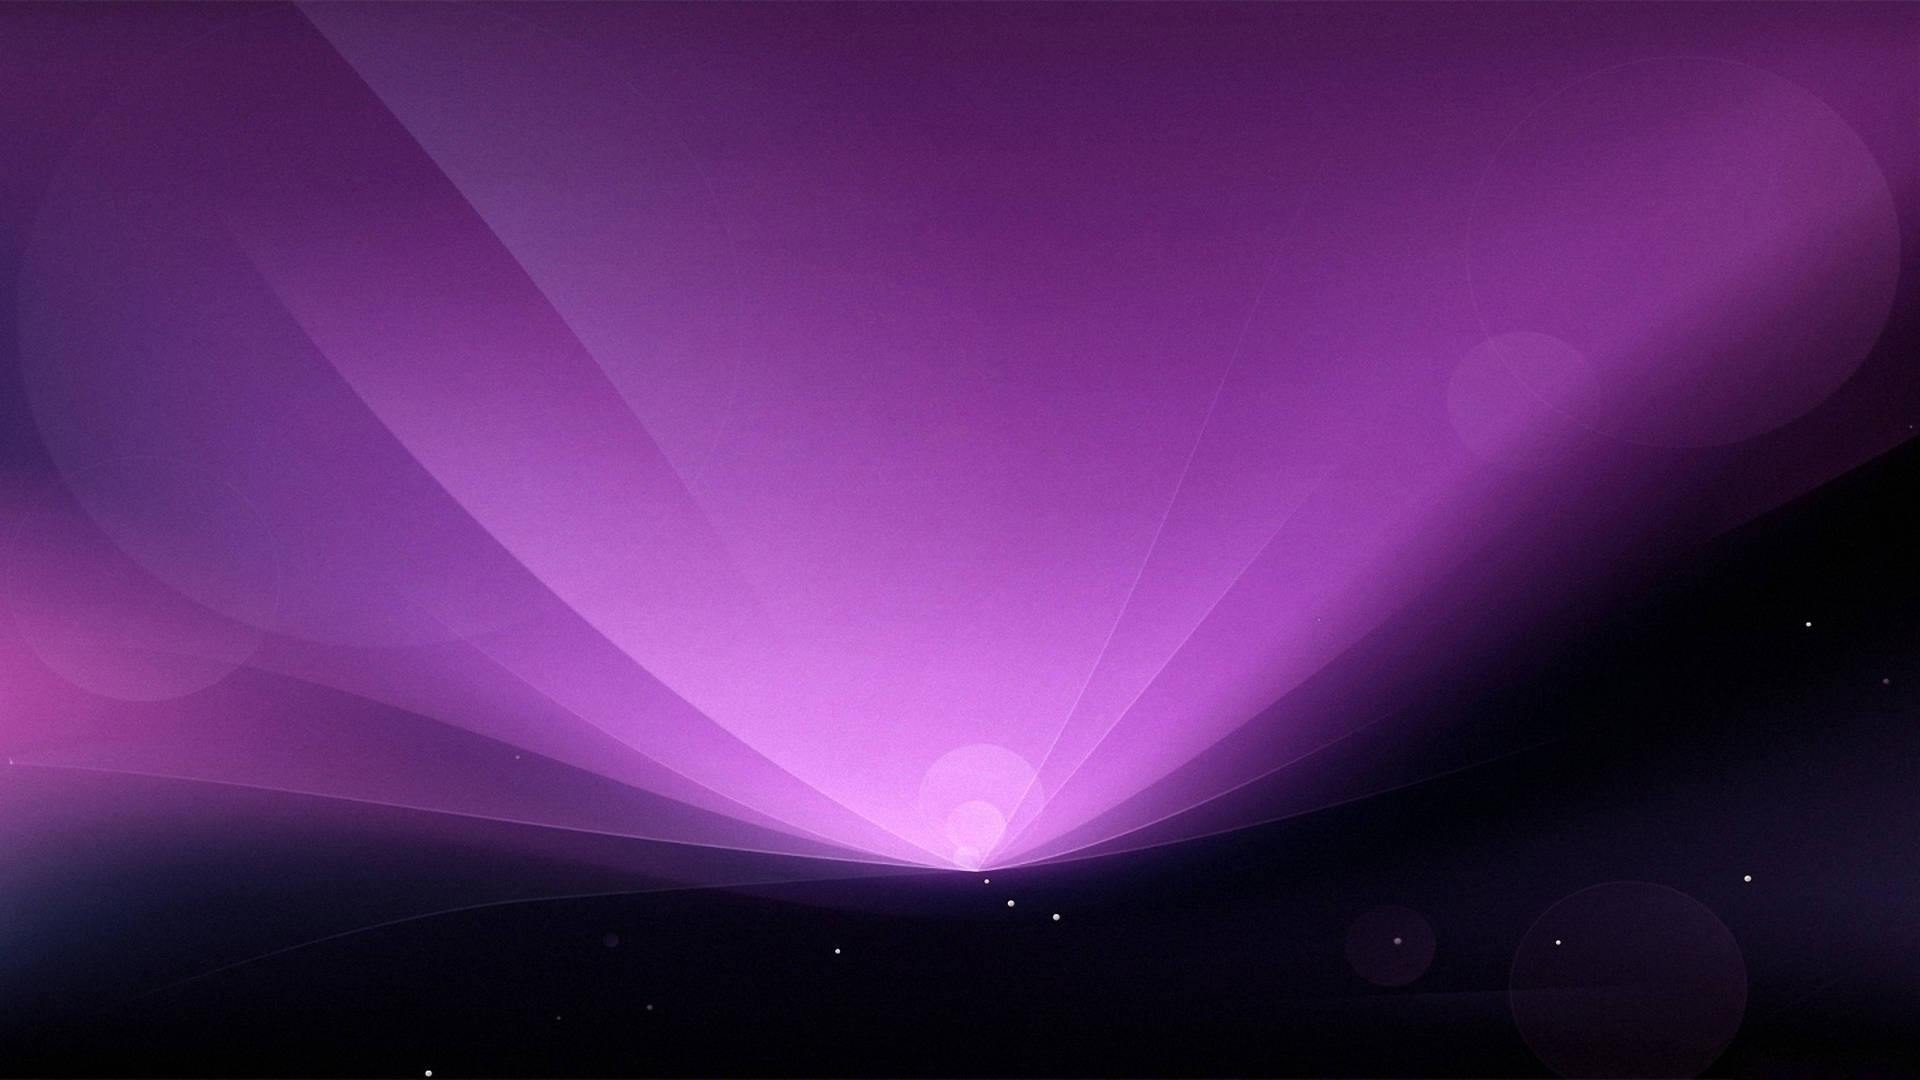 Light Art Effects On Purple Background